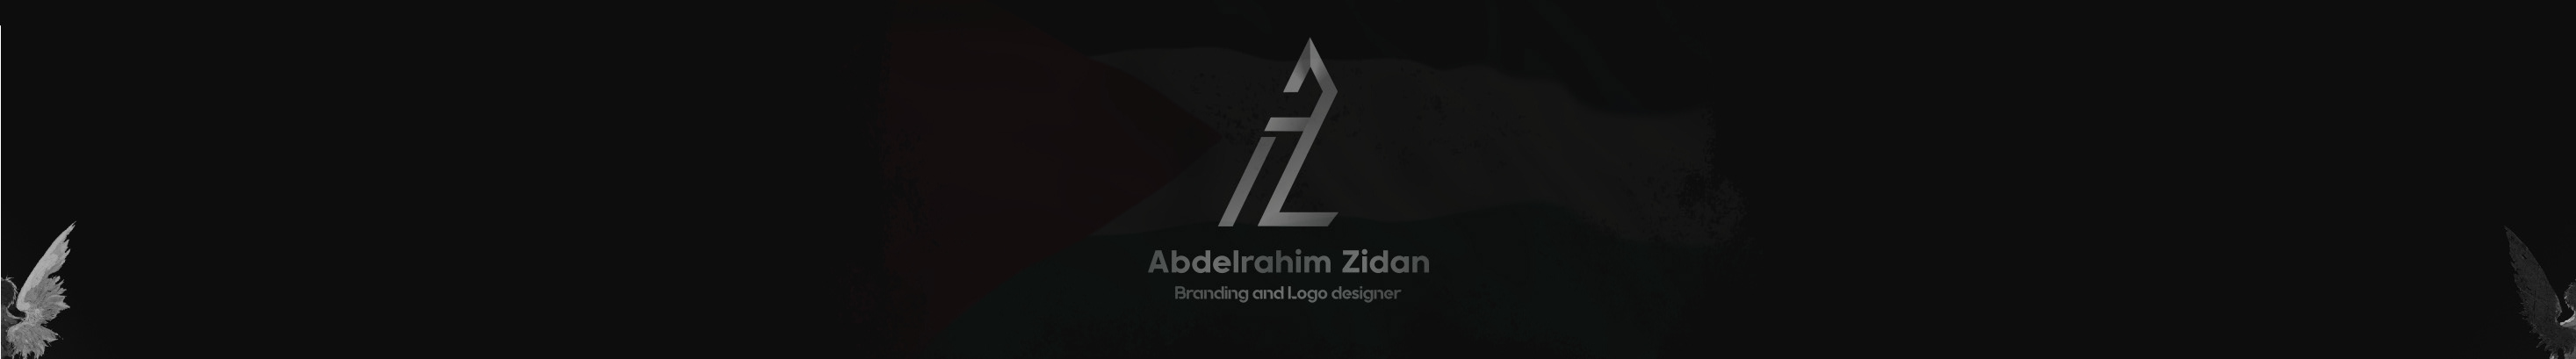 Abdelrahim Zidan's profile banner